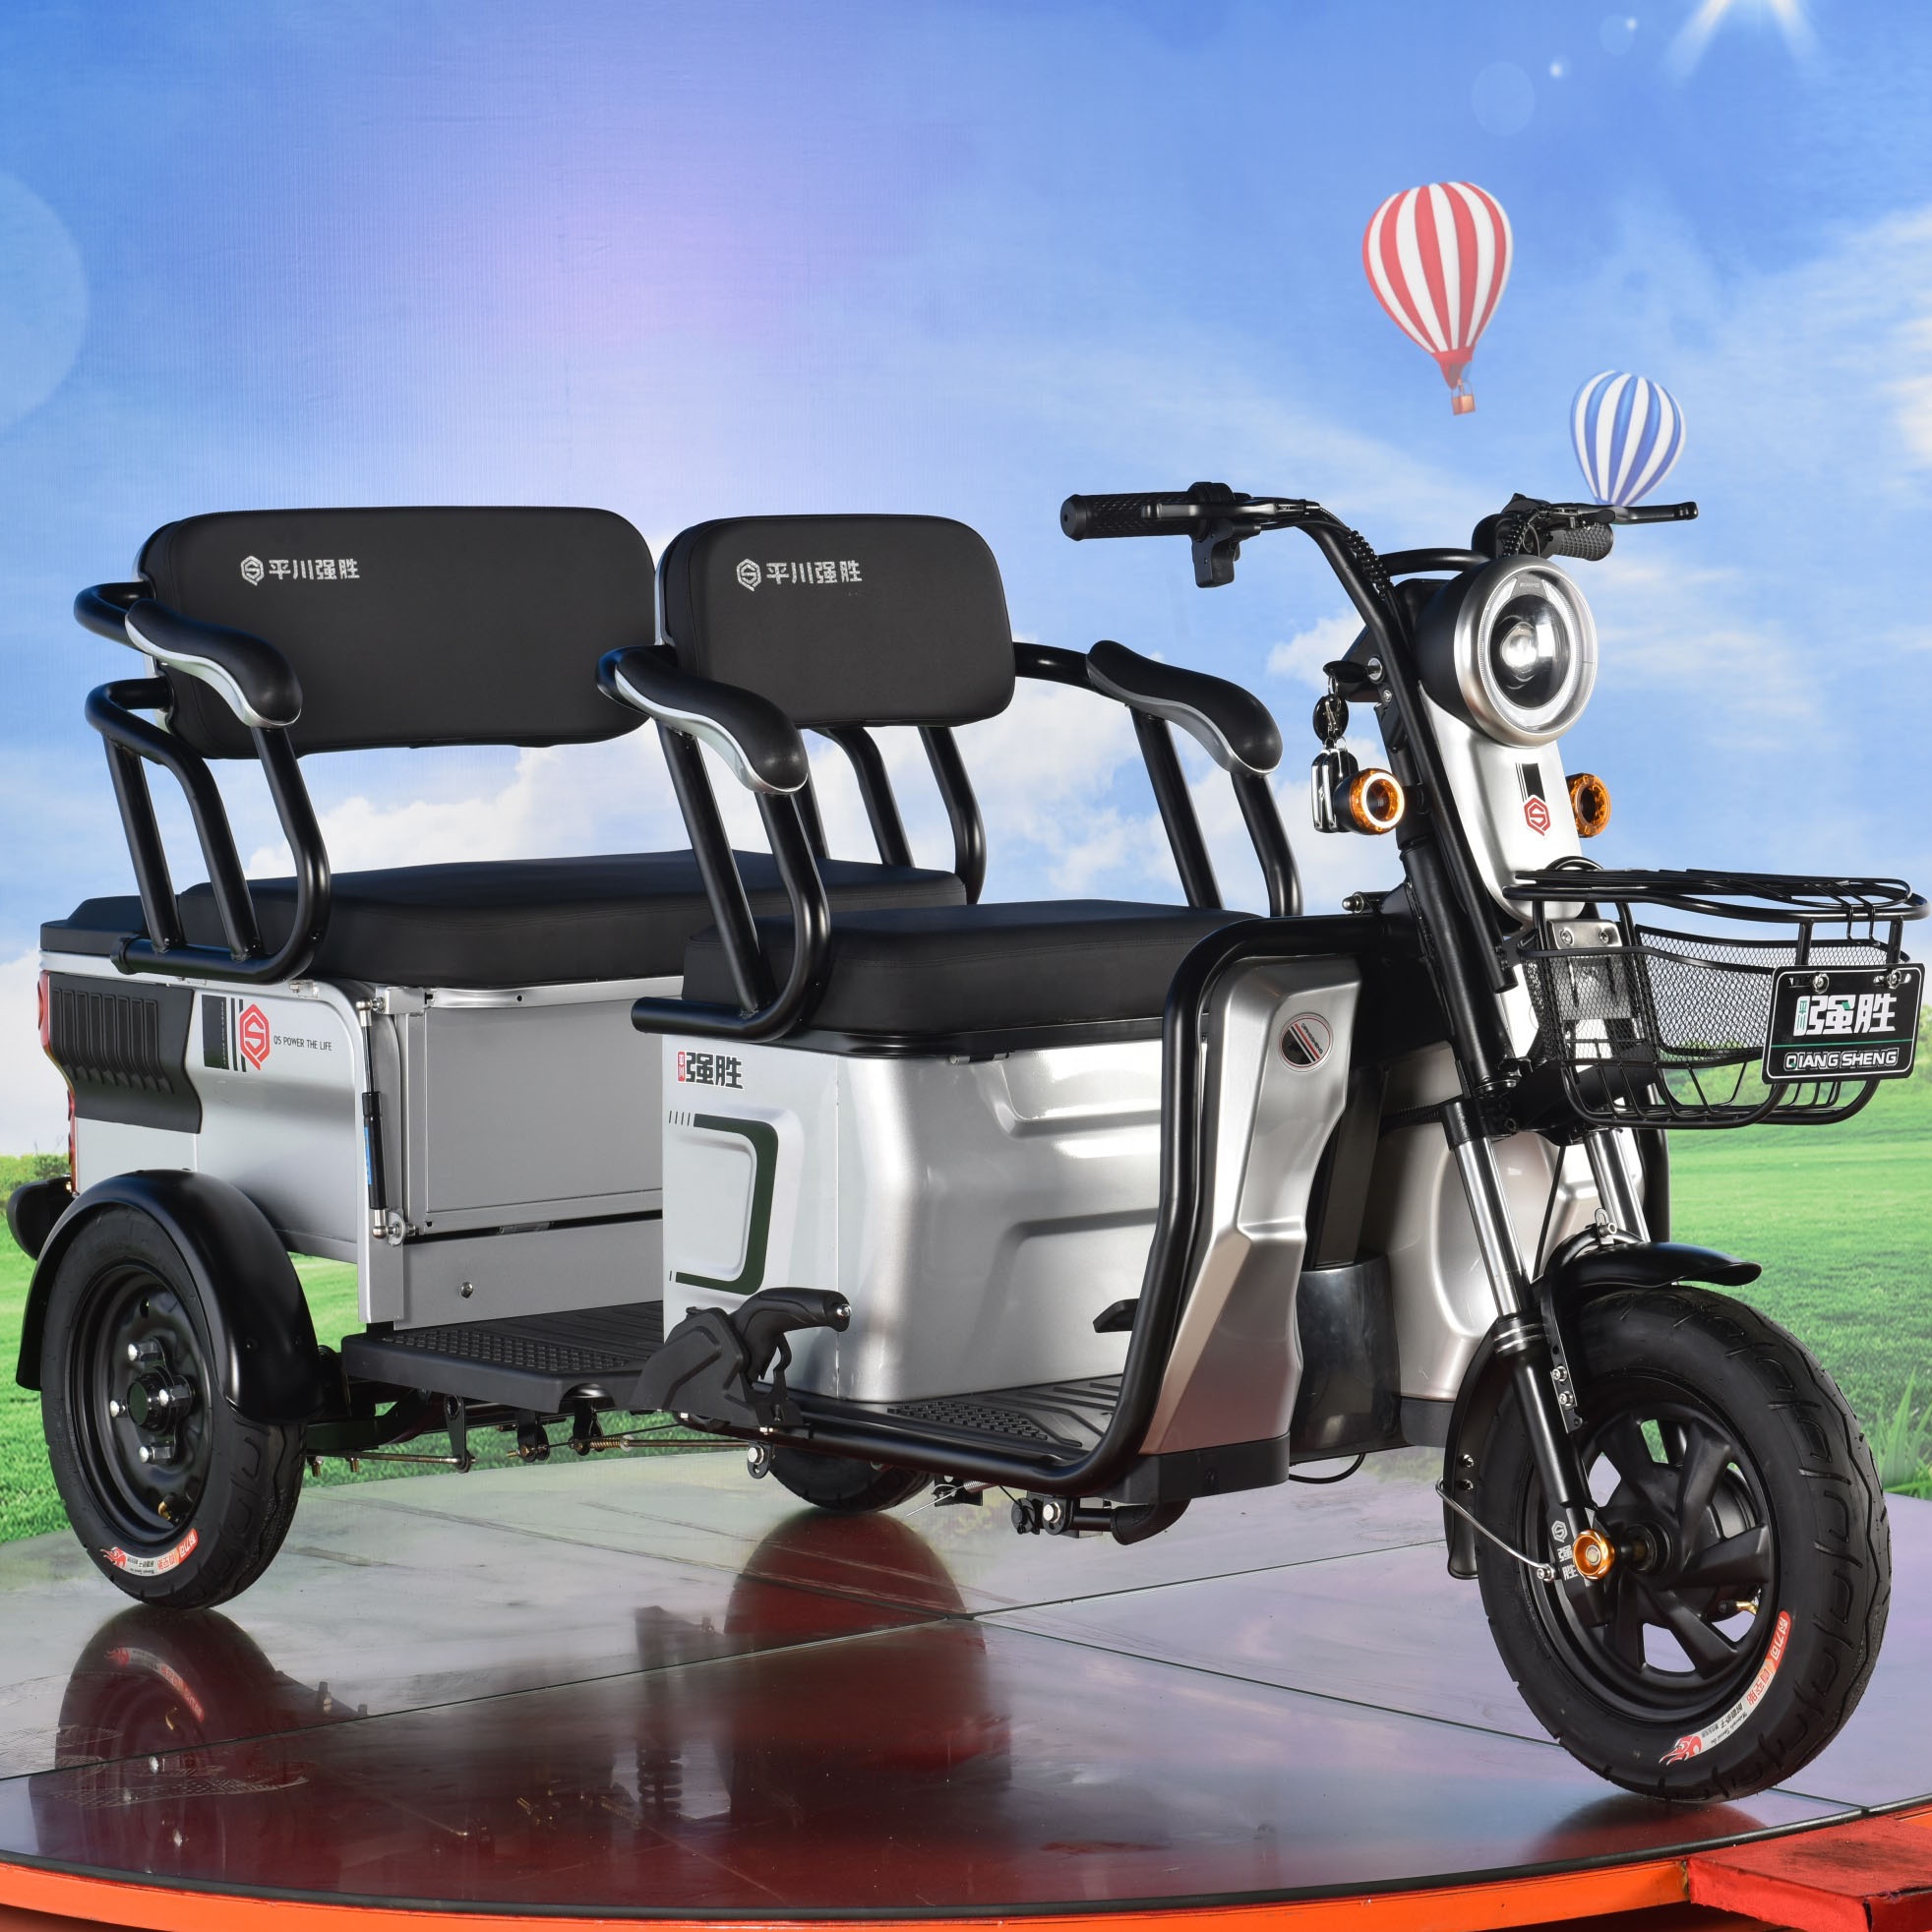 China Wholesale Cycle Rickshaw Manufactures Suppliers - Battery operated rickshaw manufacturer mini metro e rickshaw tuk tuk exporter – Qiangsheng